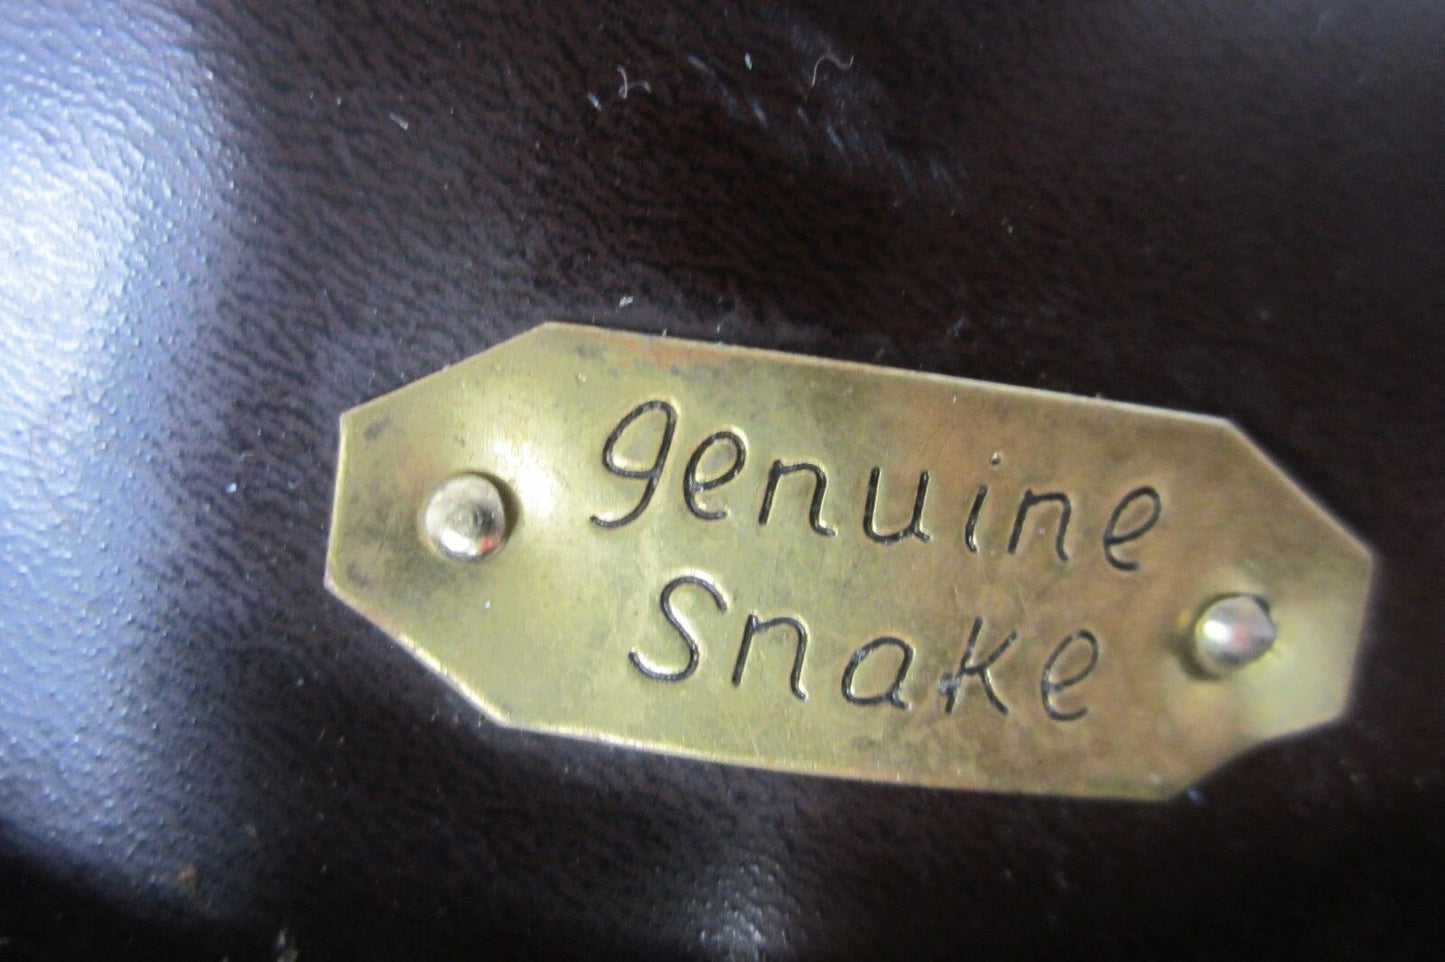 Stacy Adams Cognac 23121-03 Genuine Snake Skin Tassle Loafers Men's US 10.5 M